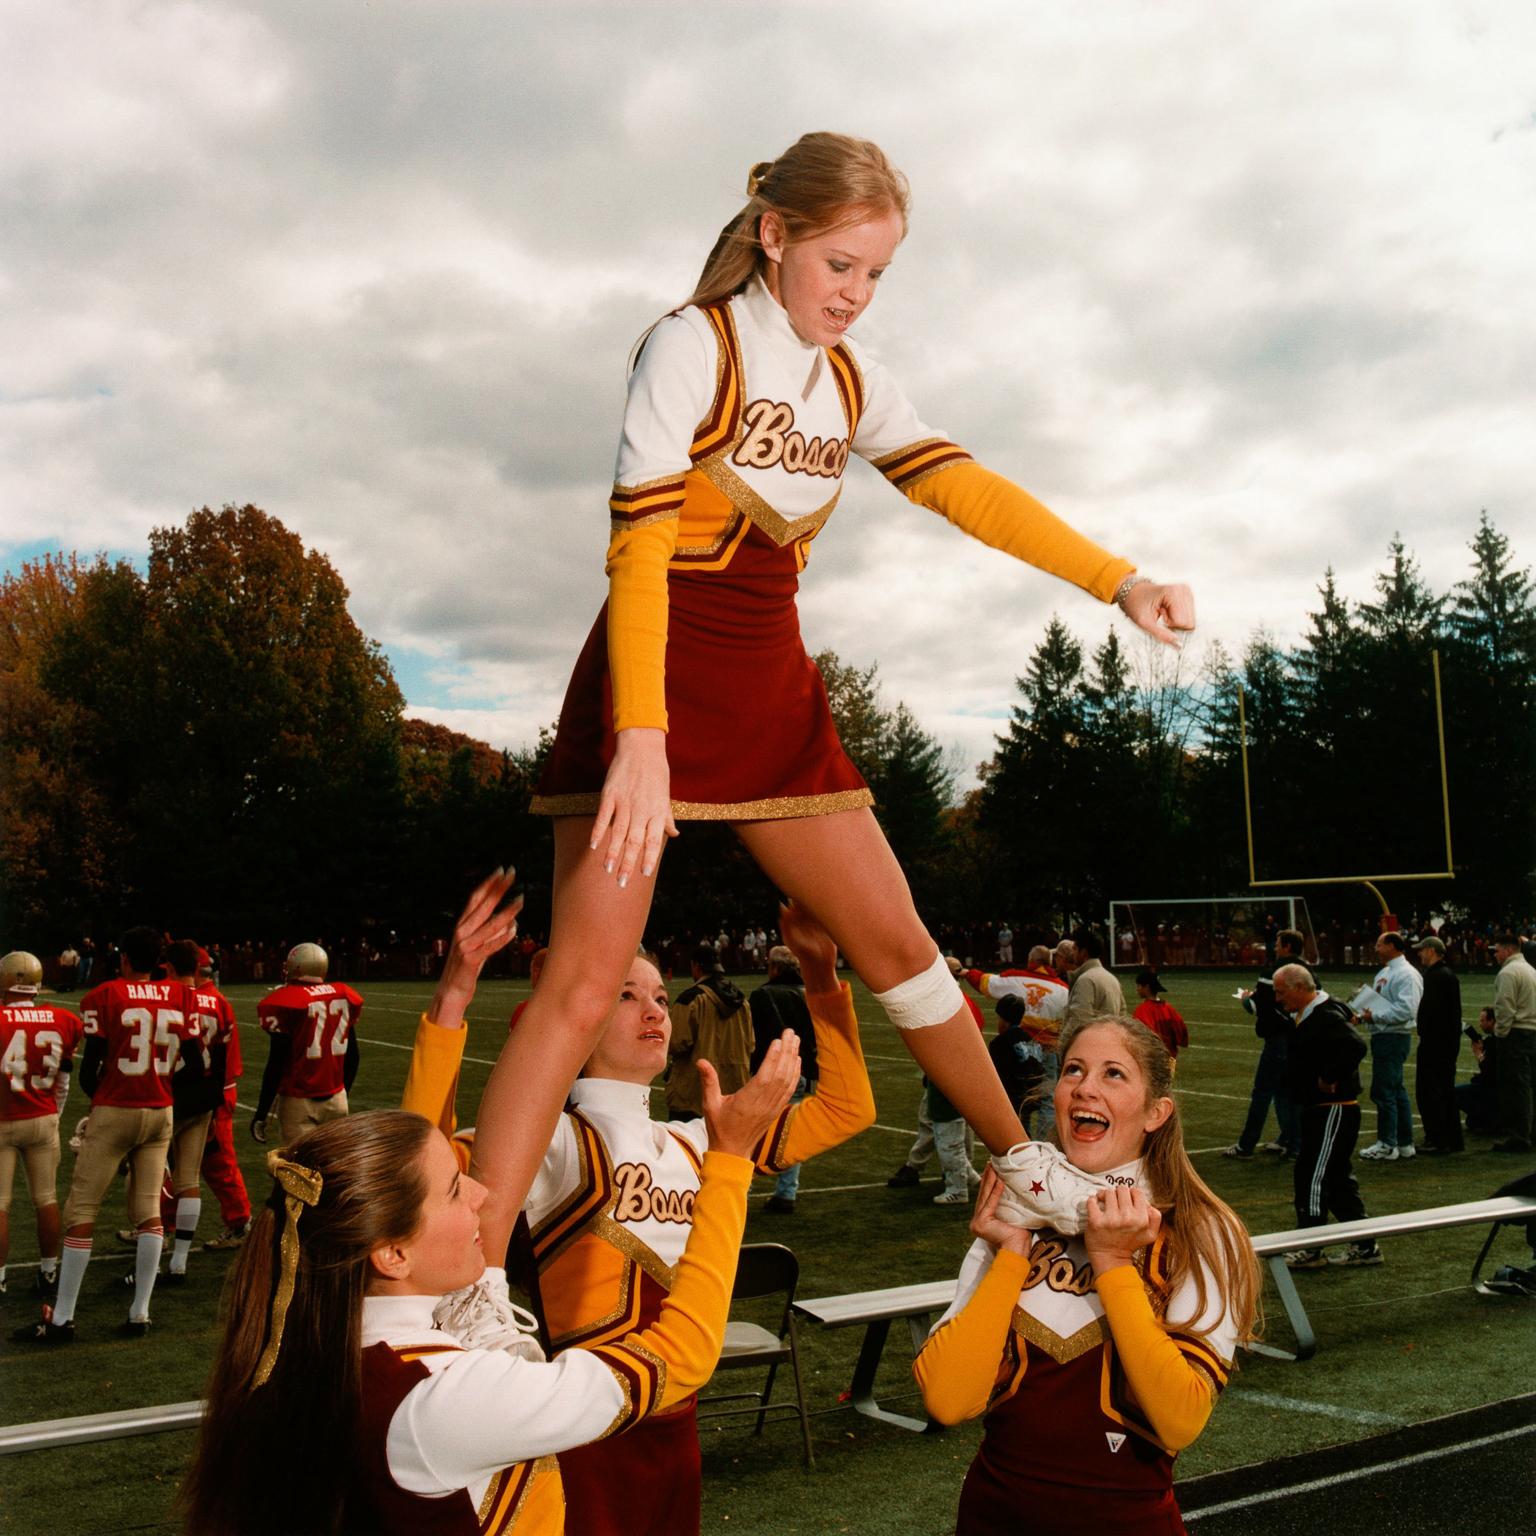 Brian Finke Color Photograph - Untitled (Cheerleading no. 89)